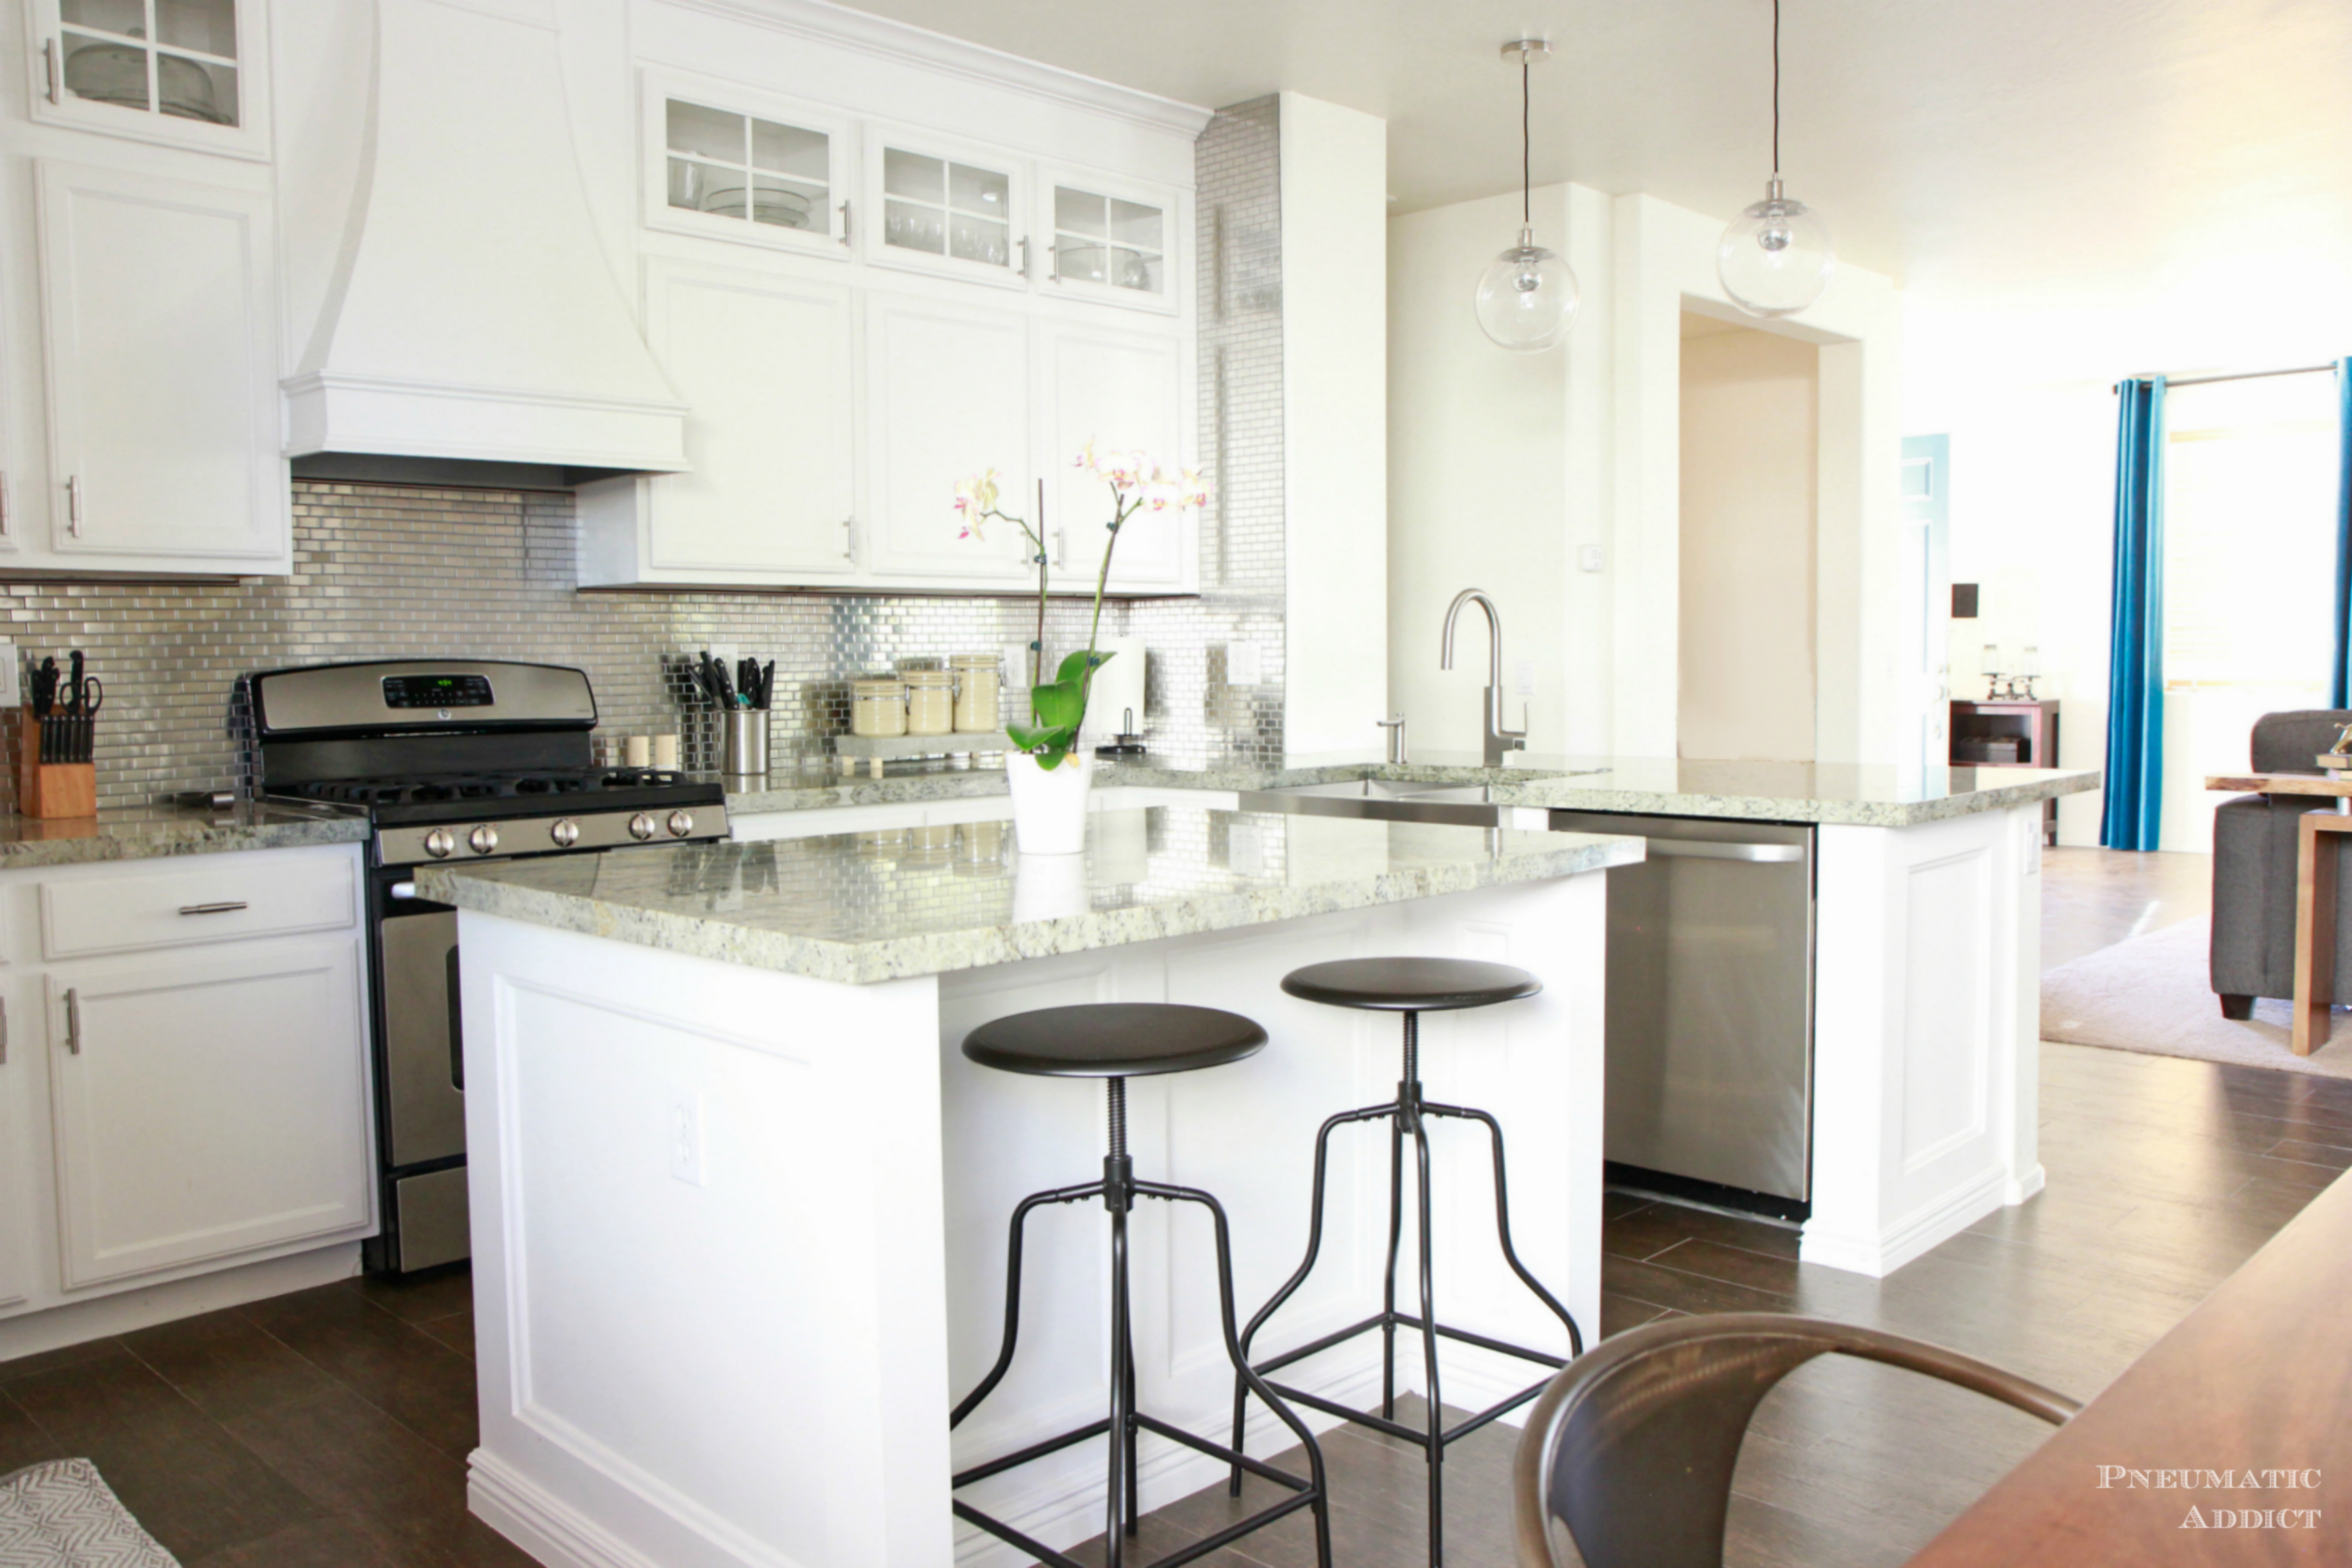 11 best white kitchen cabinets - design ideas for white cabinets MSCWKSG